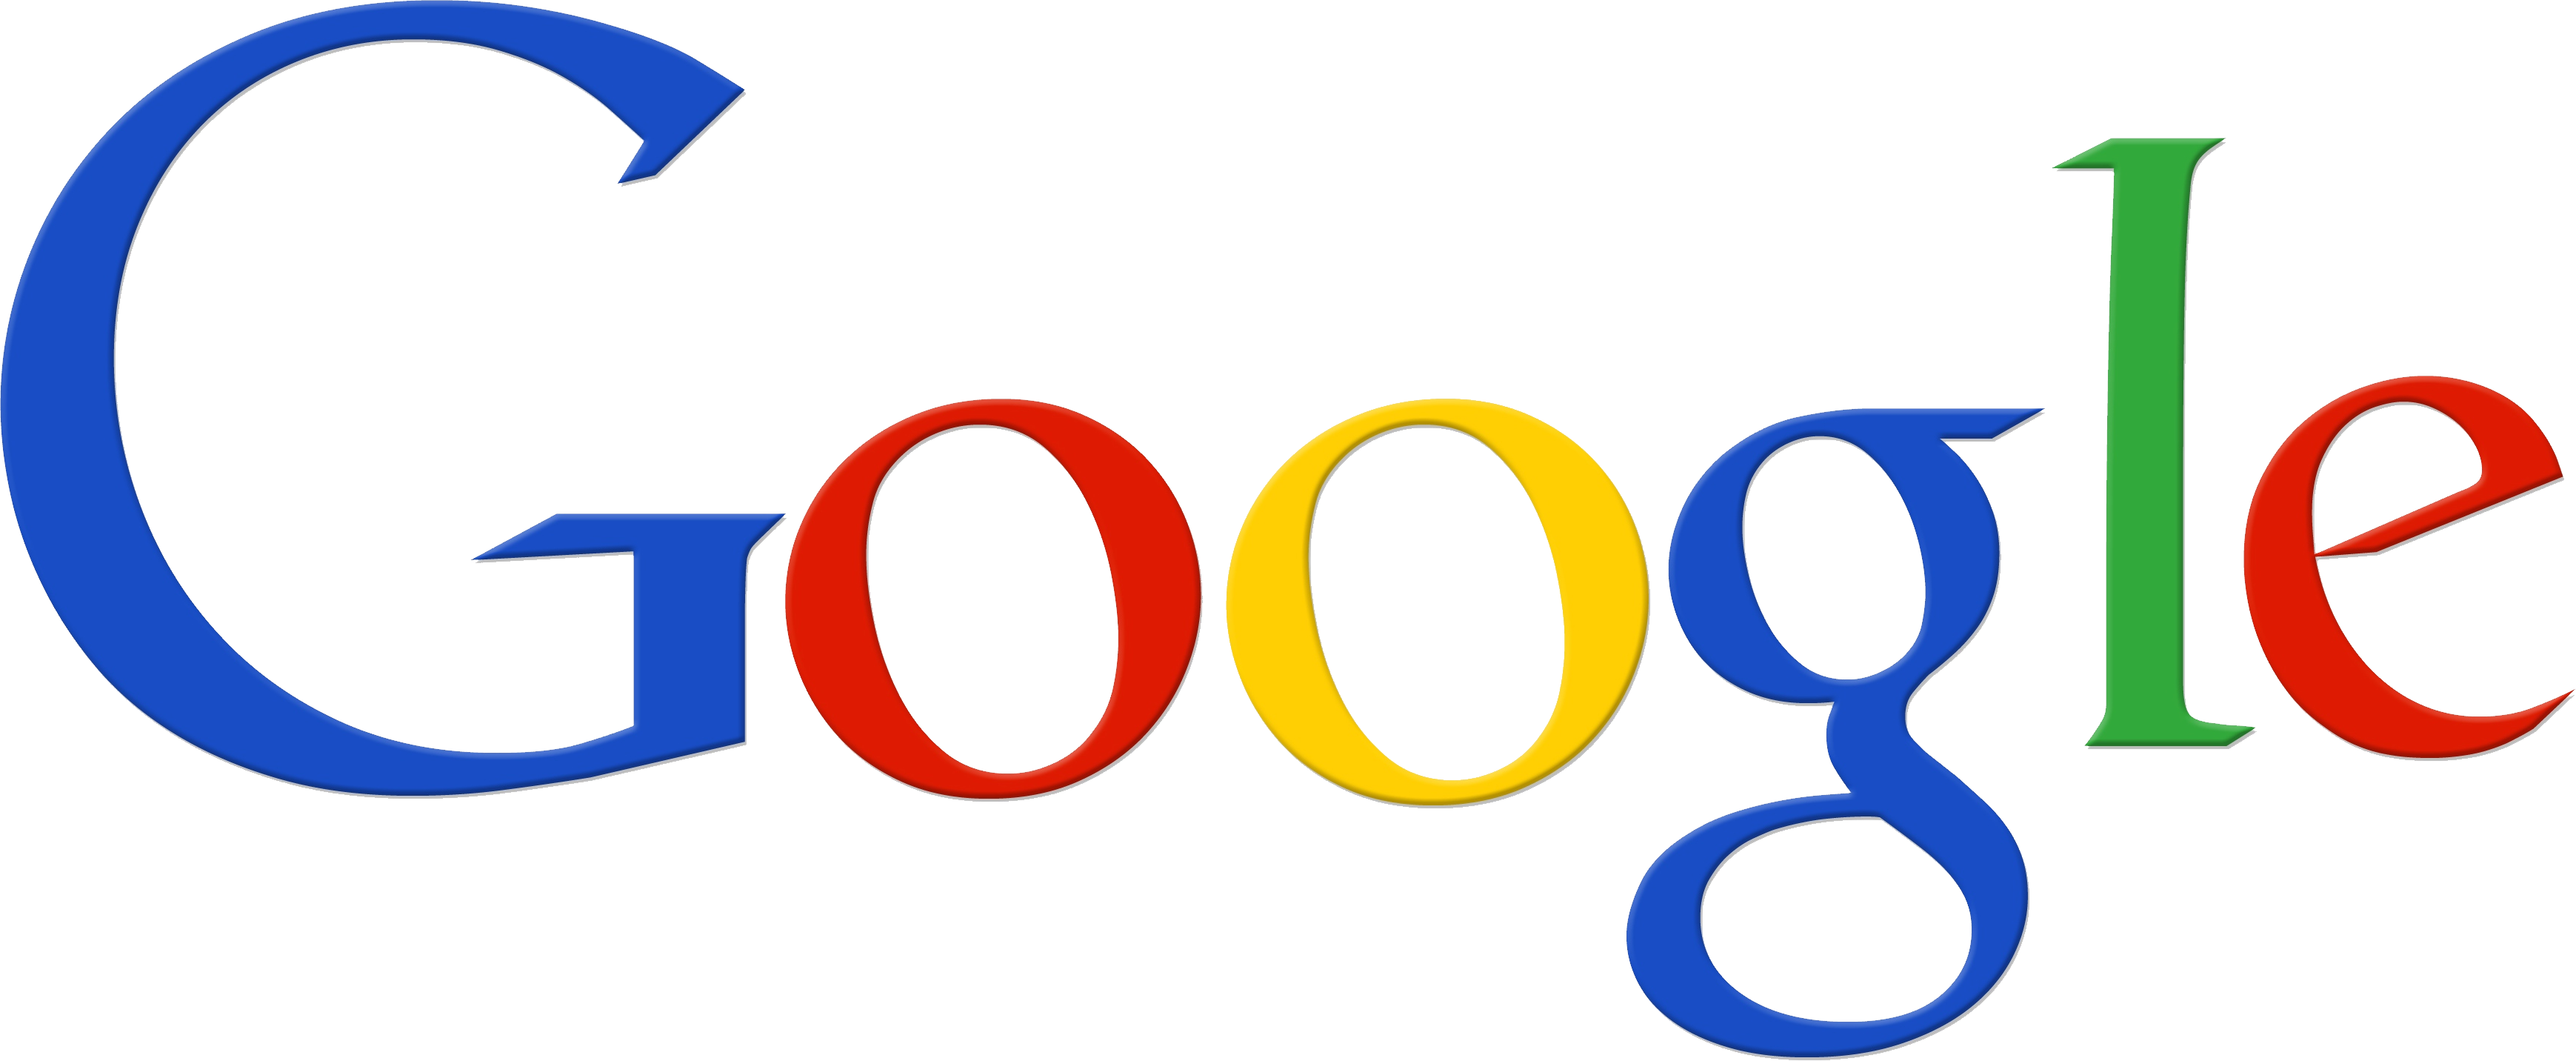 Google Logo Png - Google, Transparent background PNG HD thumbnail